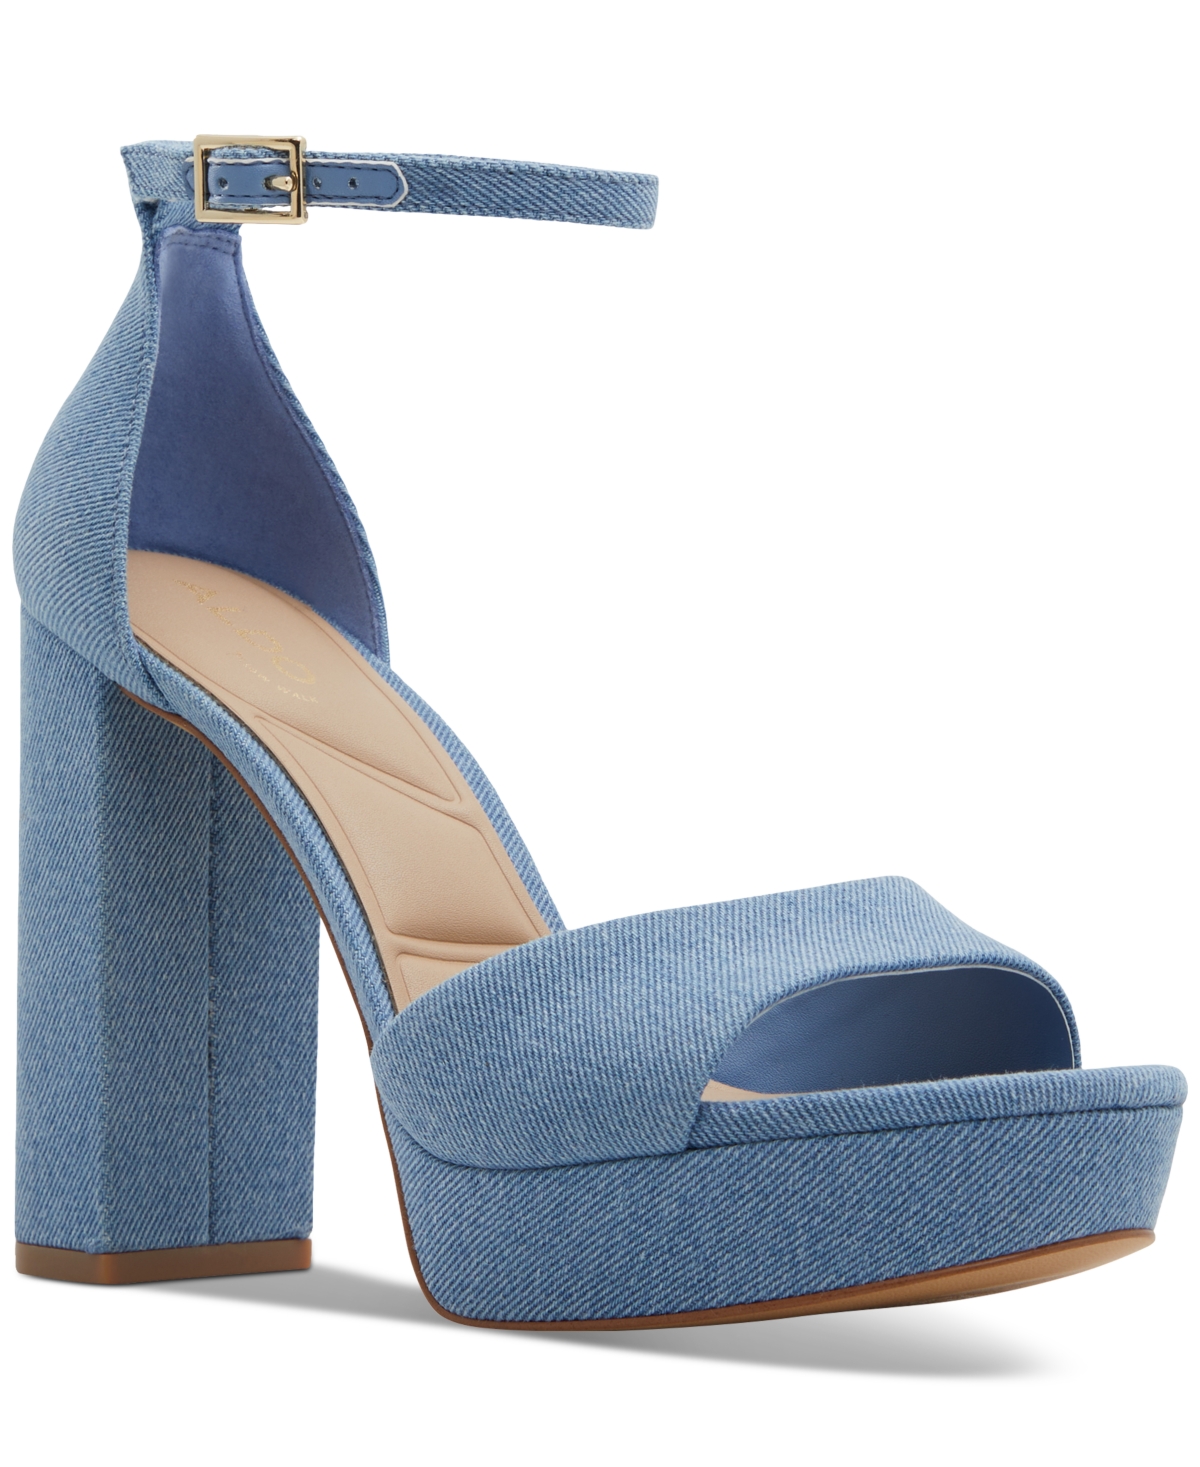 Women's Enaegyn2.0 Two-Piece Block-Heel Sandals - Medium Denim Blue